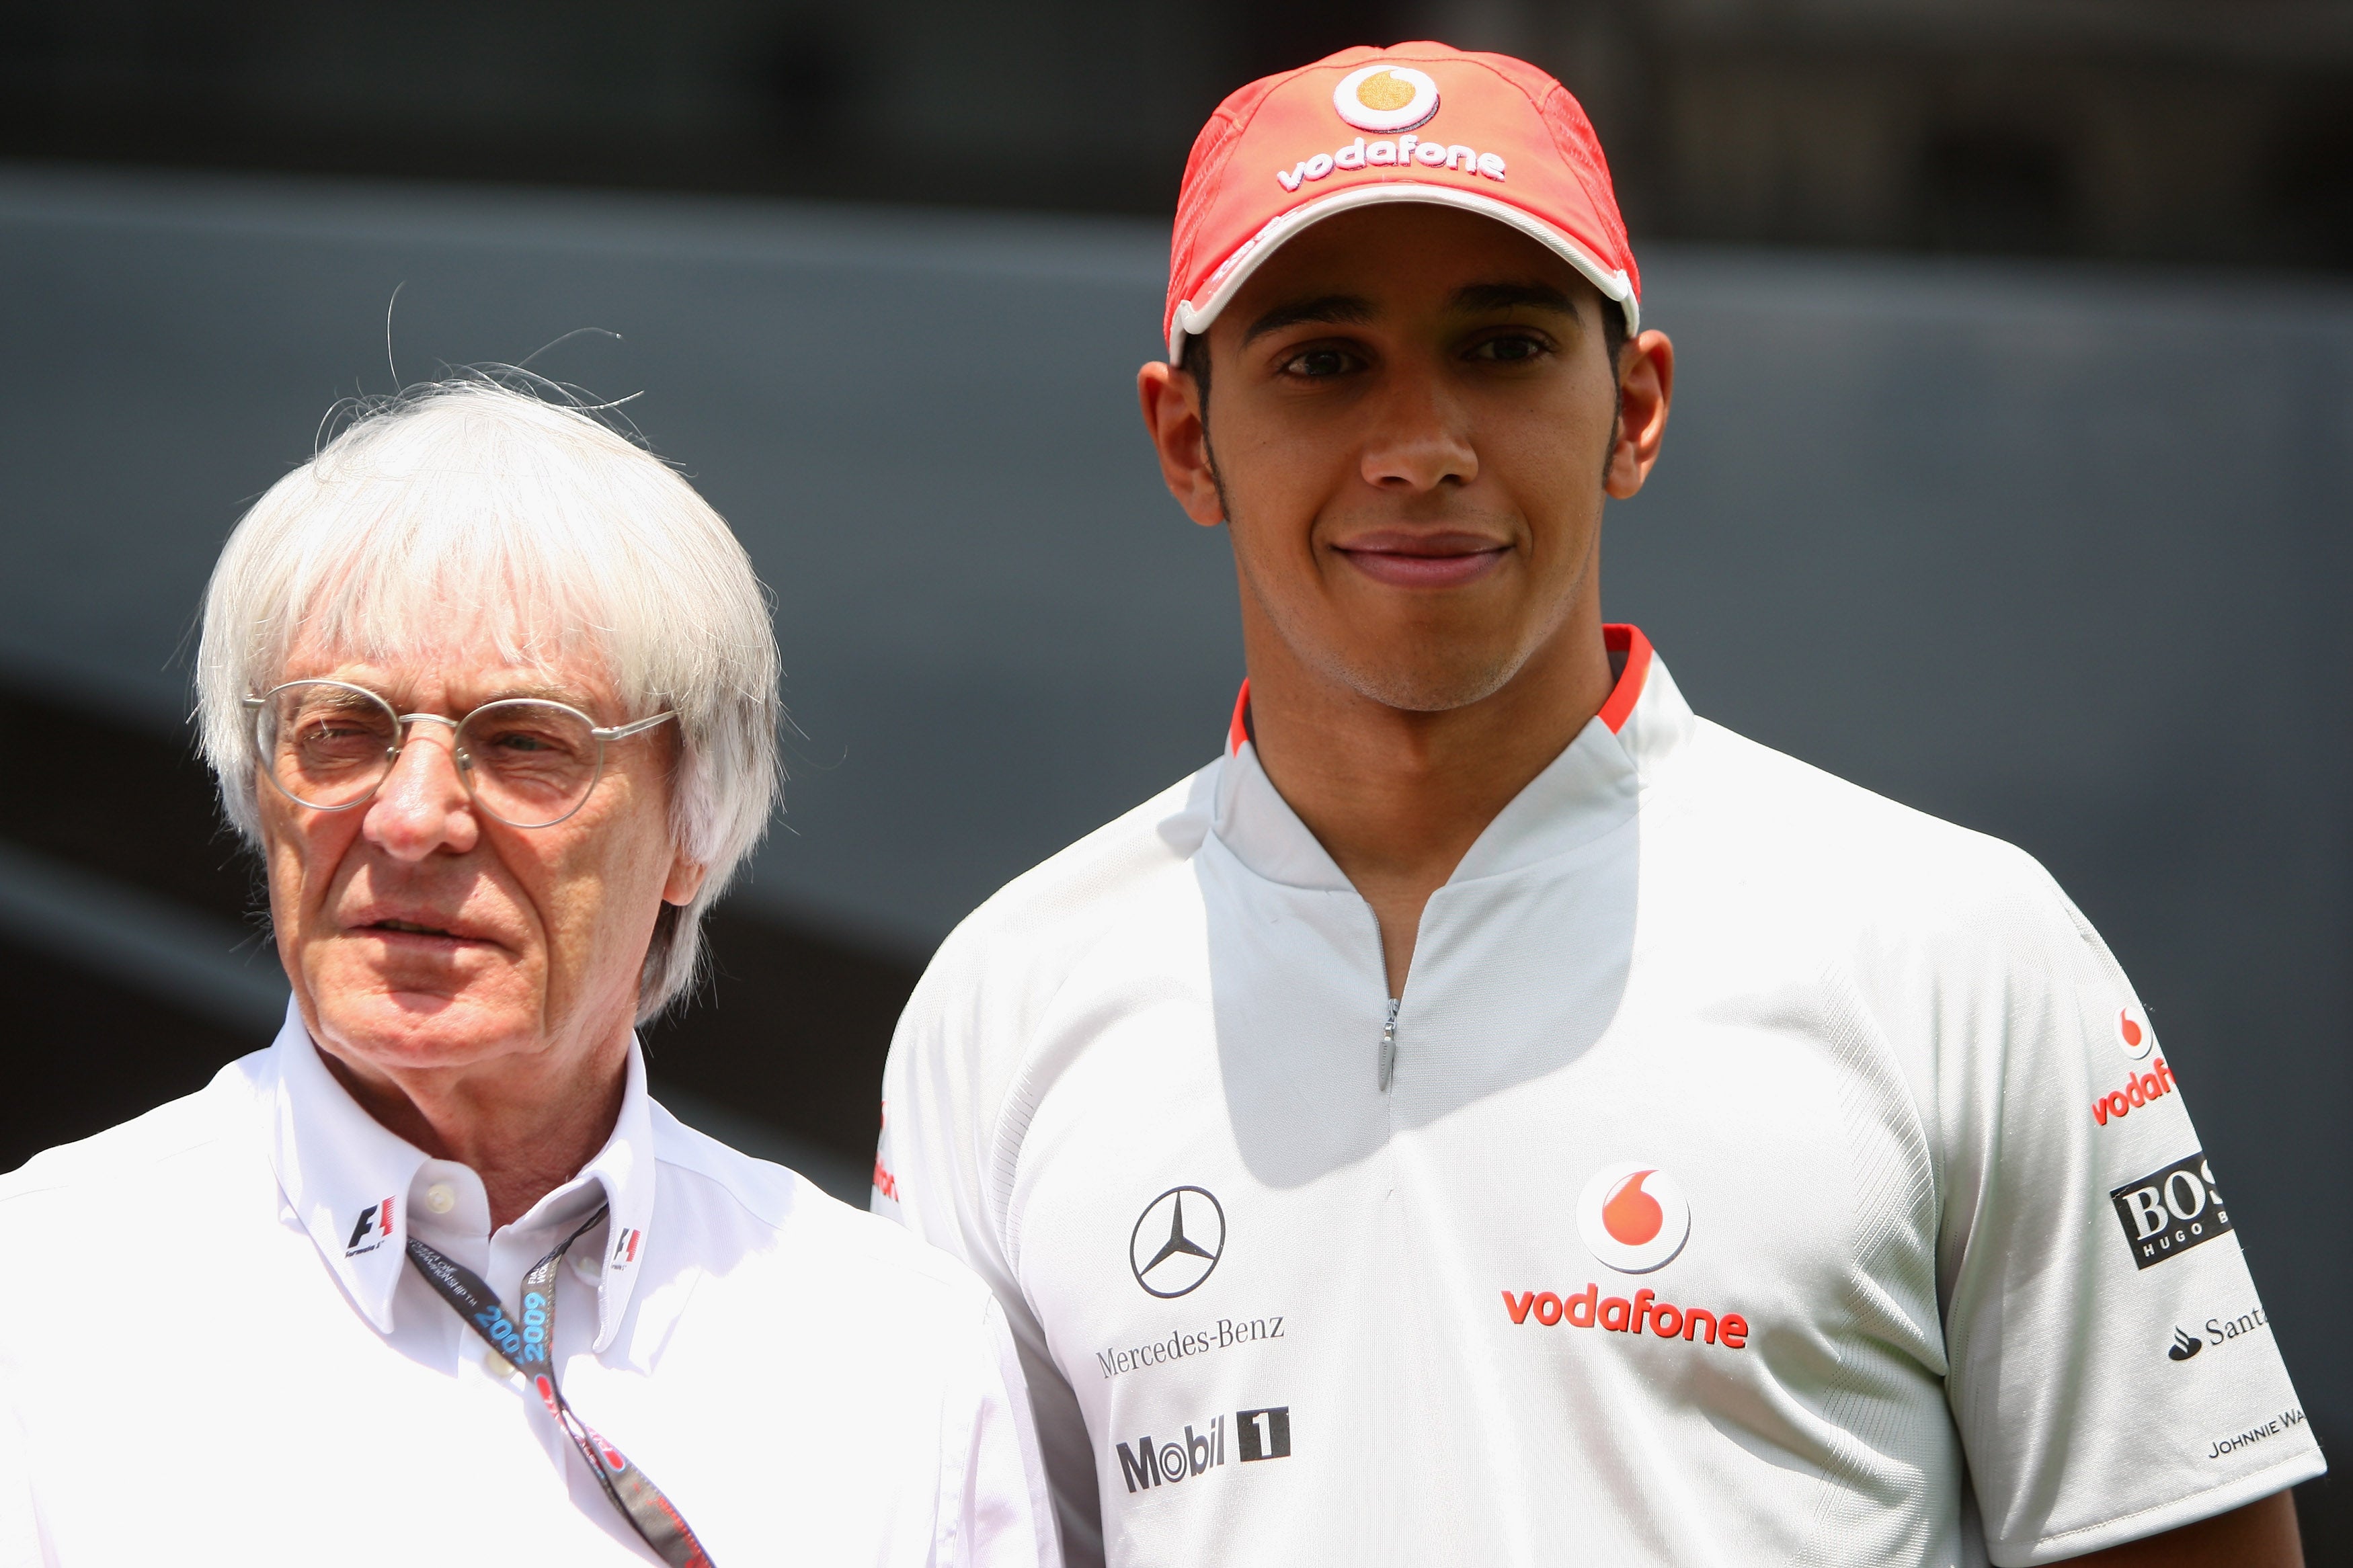 Ecclestone, pictured with Lewis Hamilton